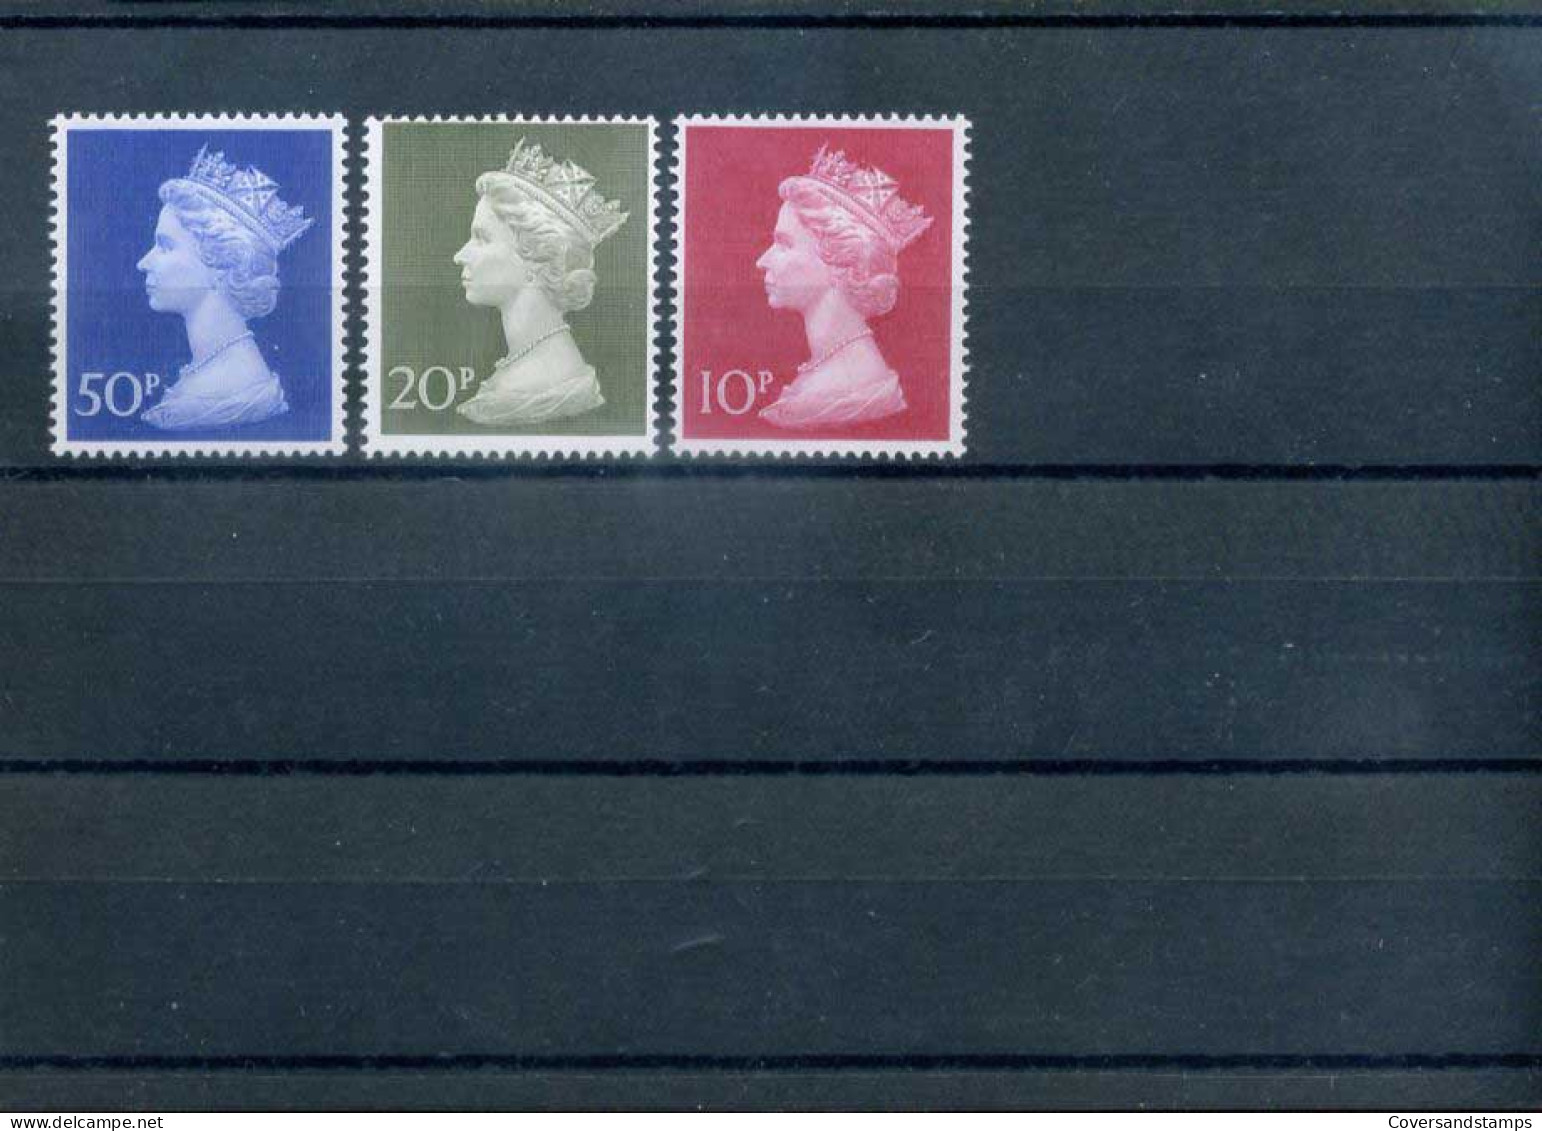 Groot-Brittannië  -  Queen Elizabeth  - Y 618/20 -   **  MNH                             - Unused Stamps